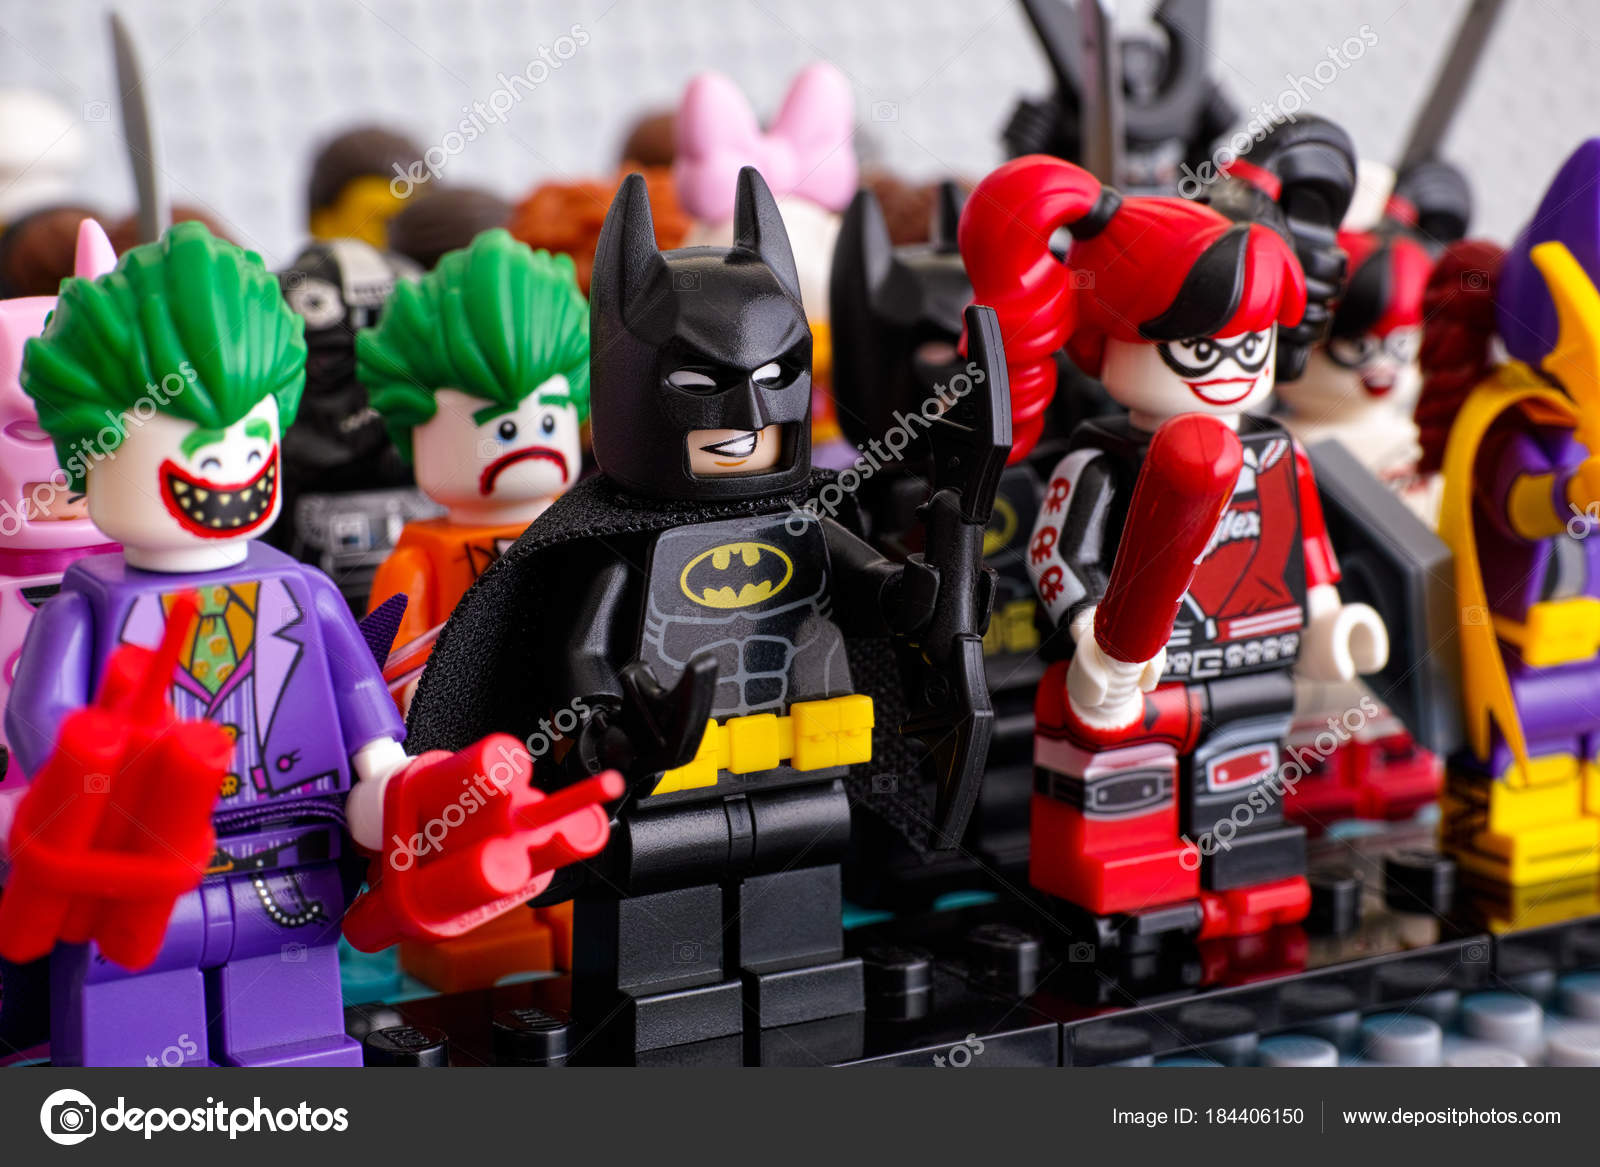 Nova linha de minifiguras 'LEGO Batman